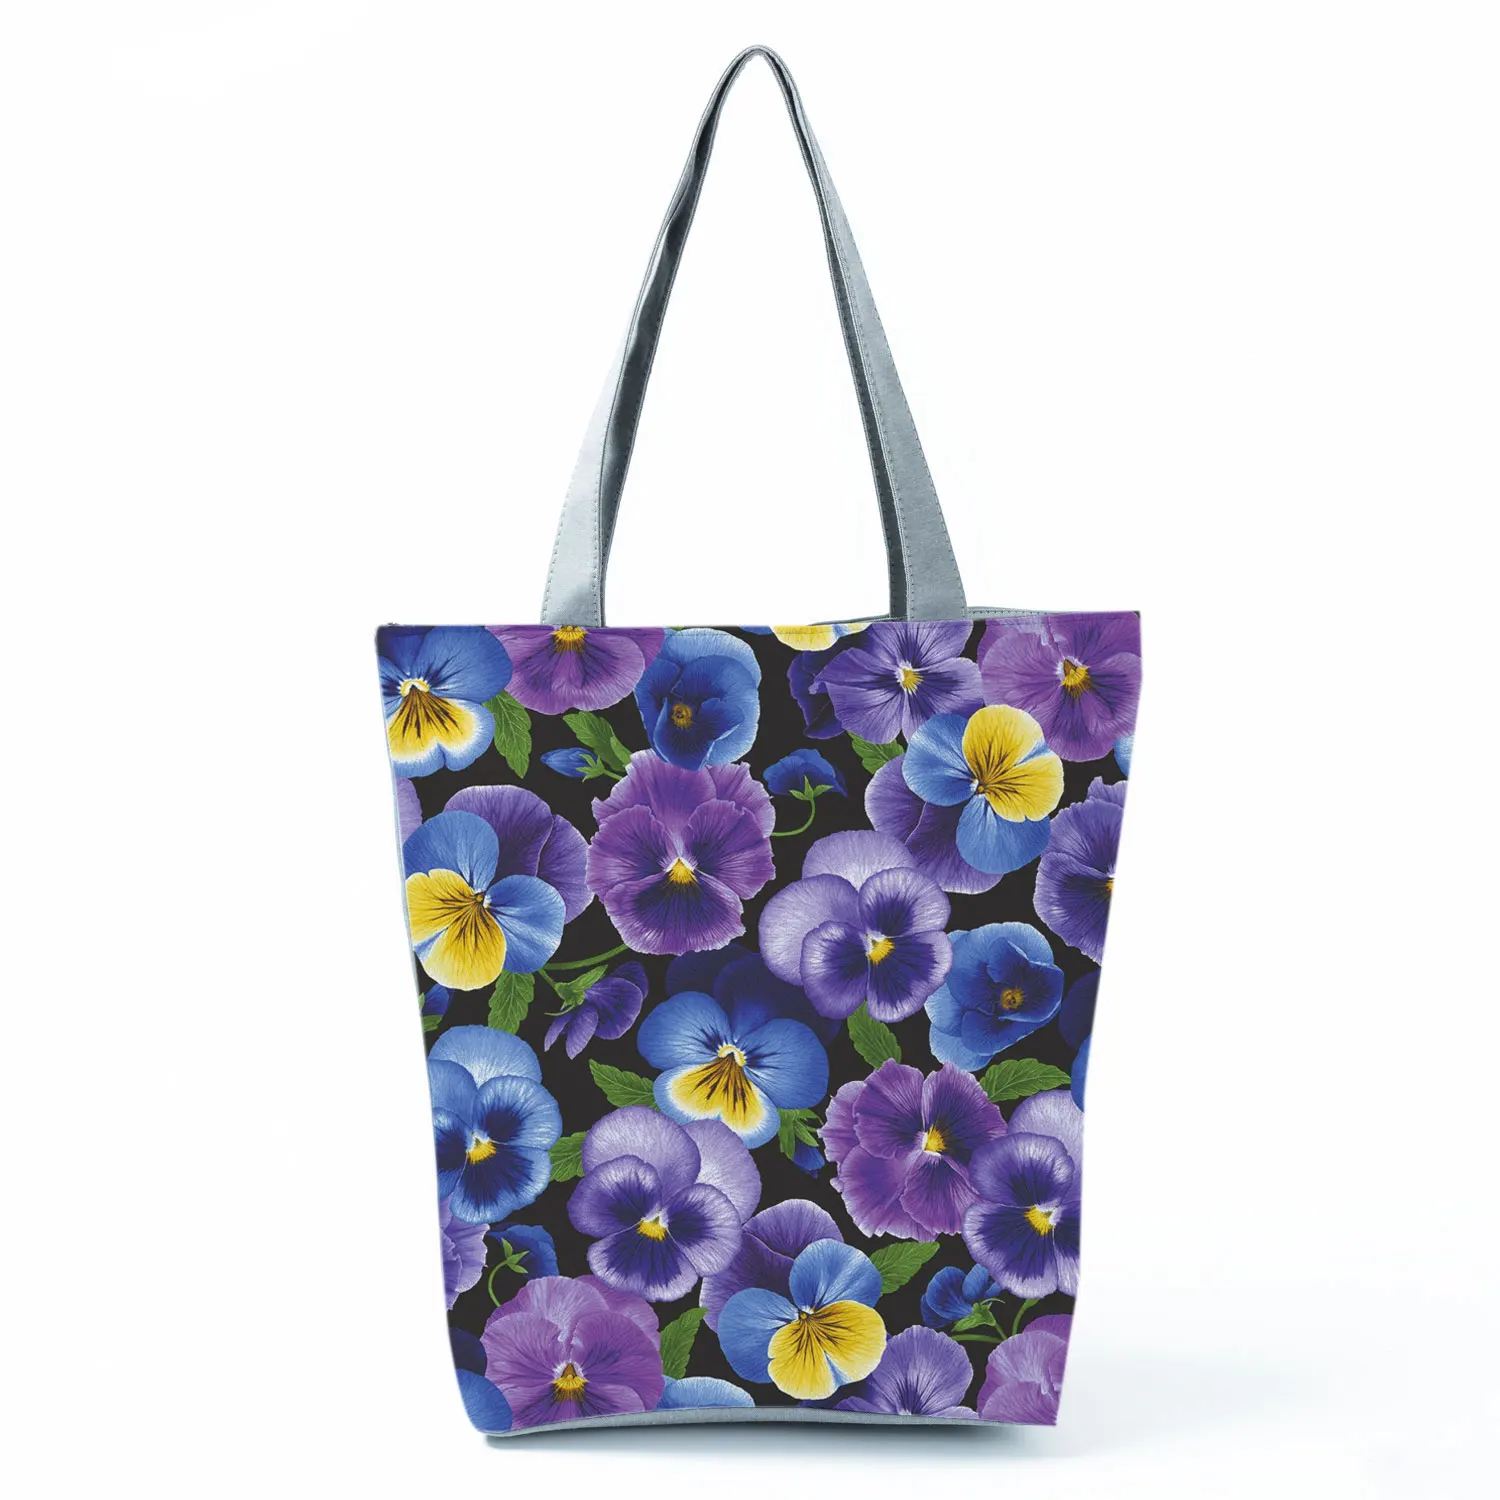 Customized Bright Colors Floral Print Tote Bag For Women Shoulder Bag Ladies Fashion Handbag Large Capacity Shopping Totes Bags 